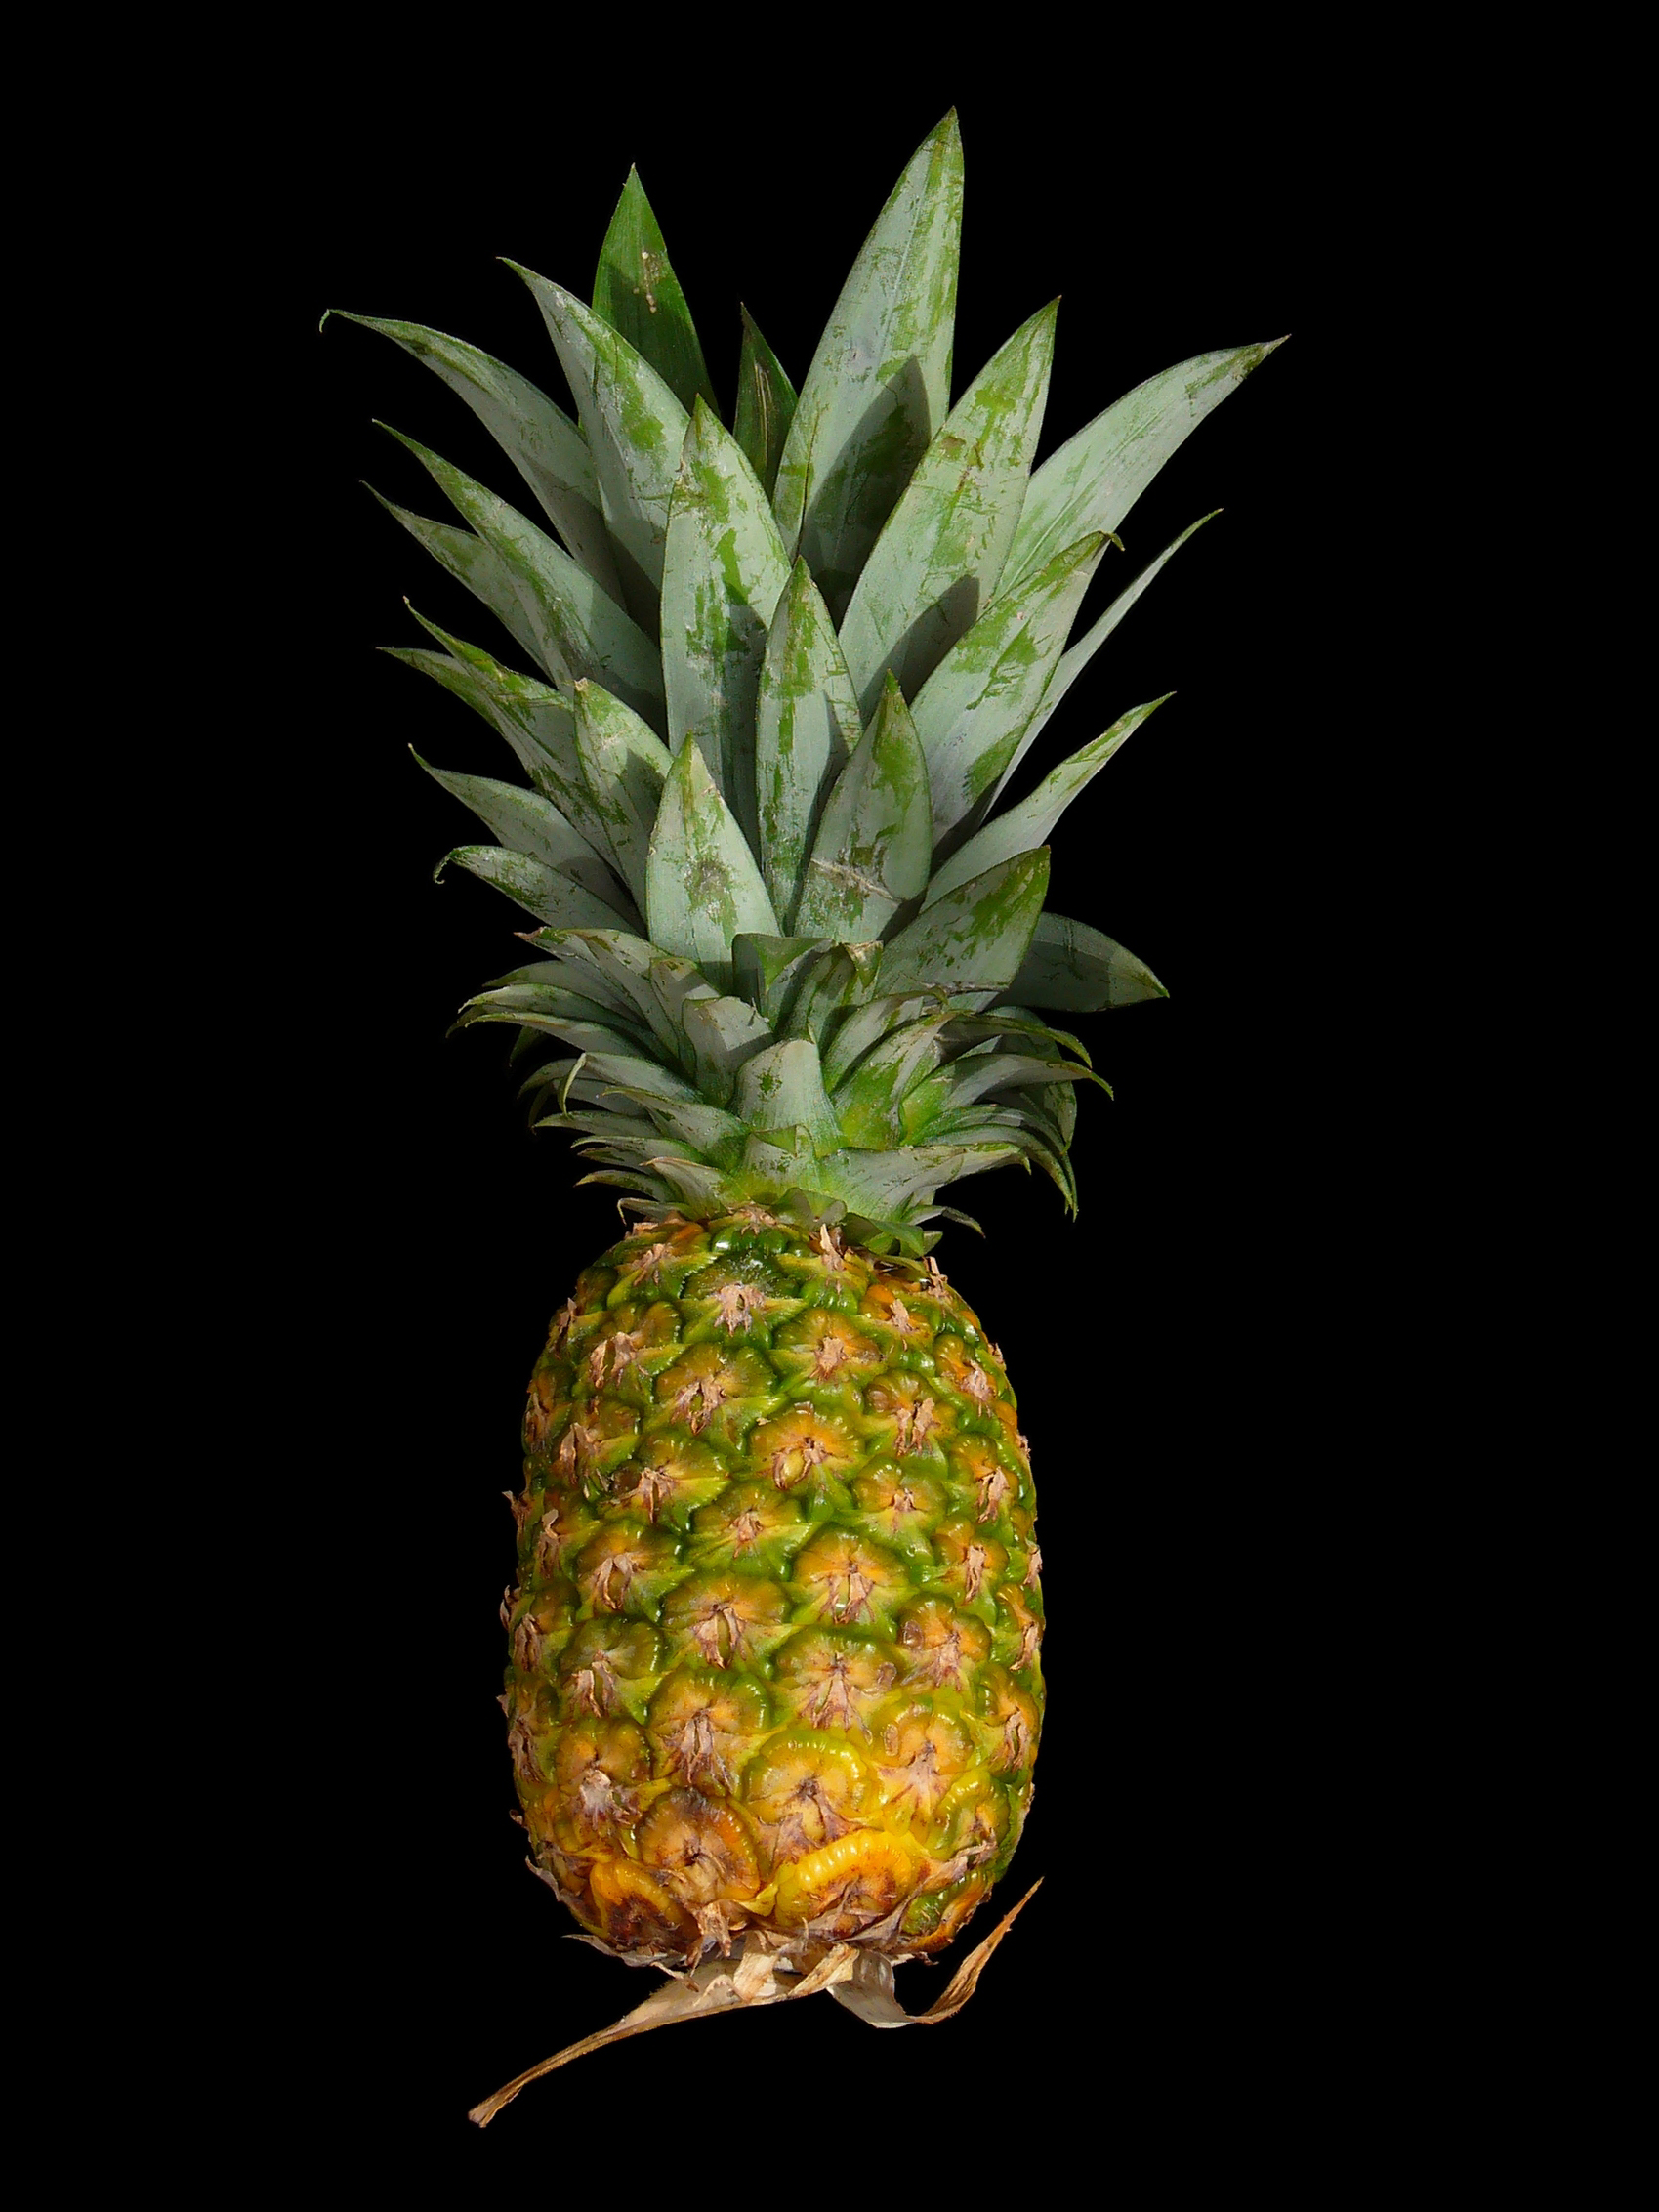 File:Ananas comosus 005.JPG - Wikimedia Commons